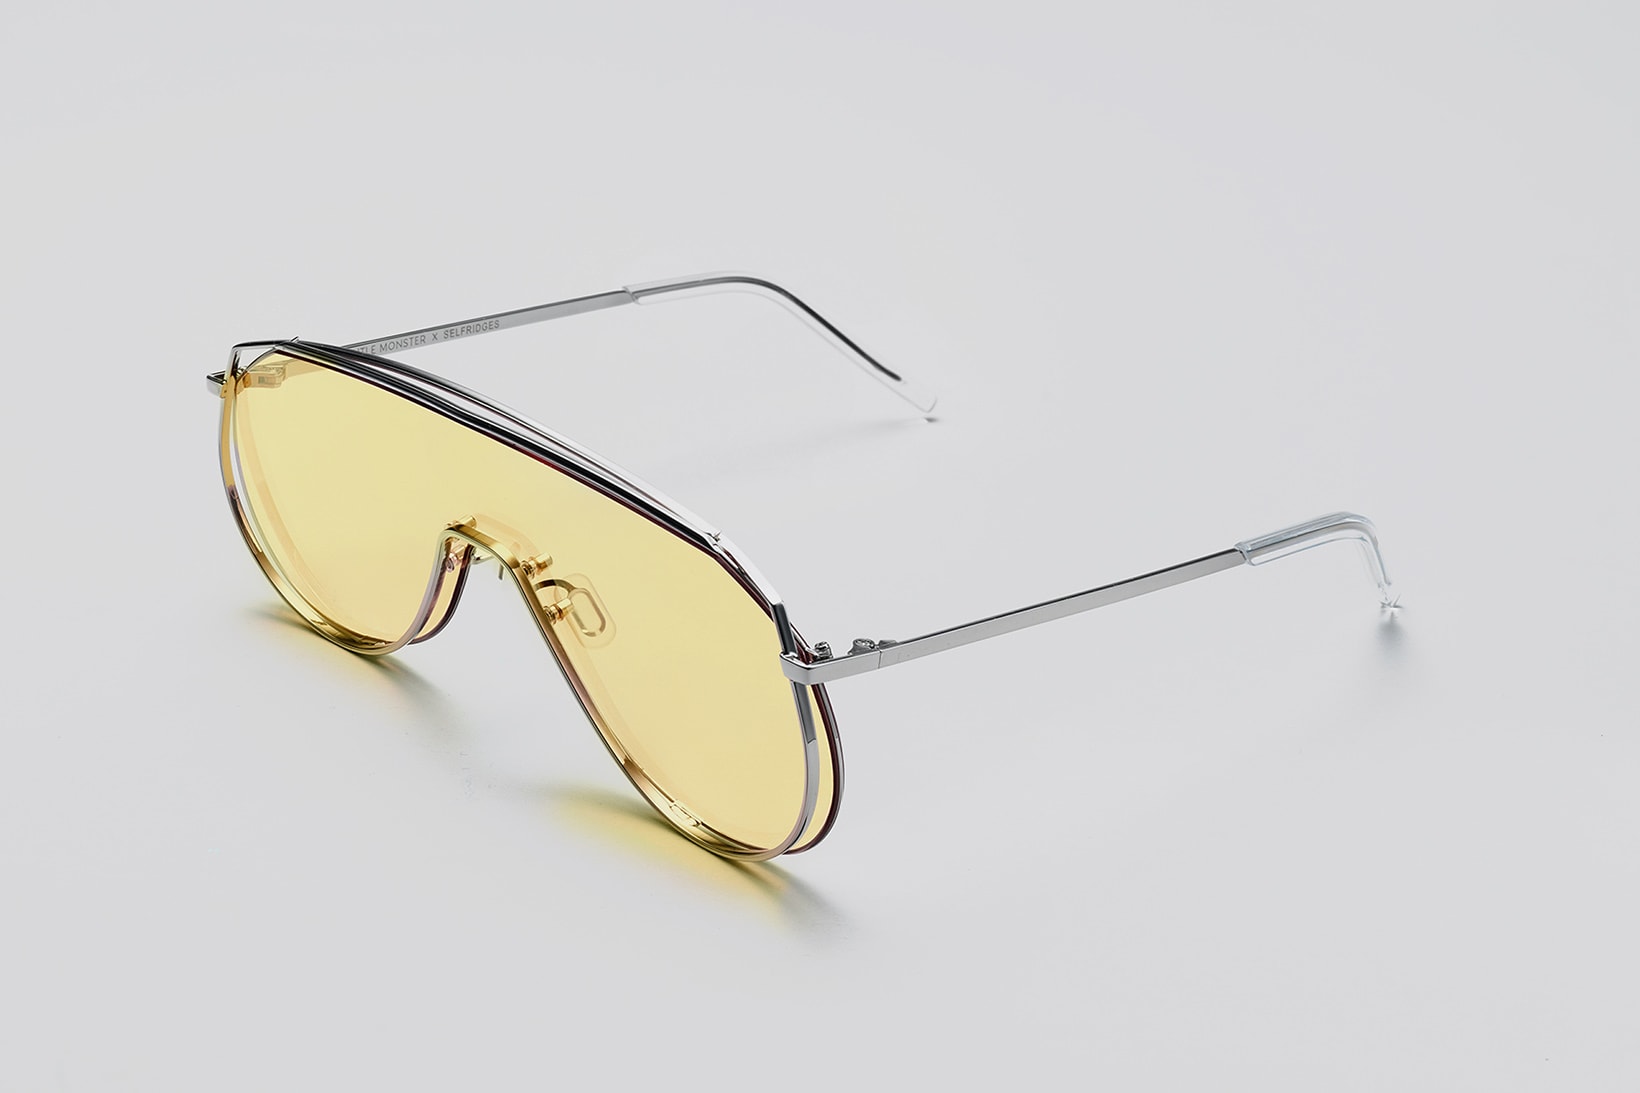 GENTLE MONSTER Selfridges Collab Collaboration Details Pop-Up Store Exclusive Capsule Collection Eyewear 3 Colorways Afix Frame